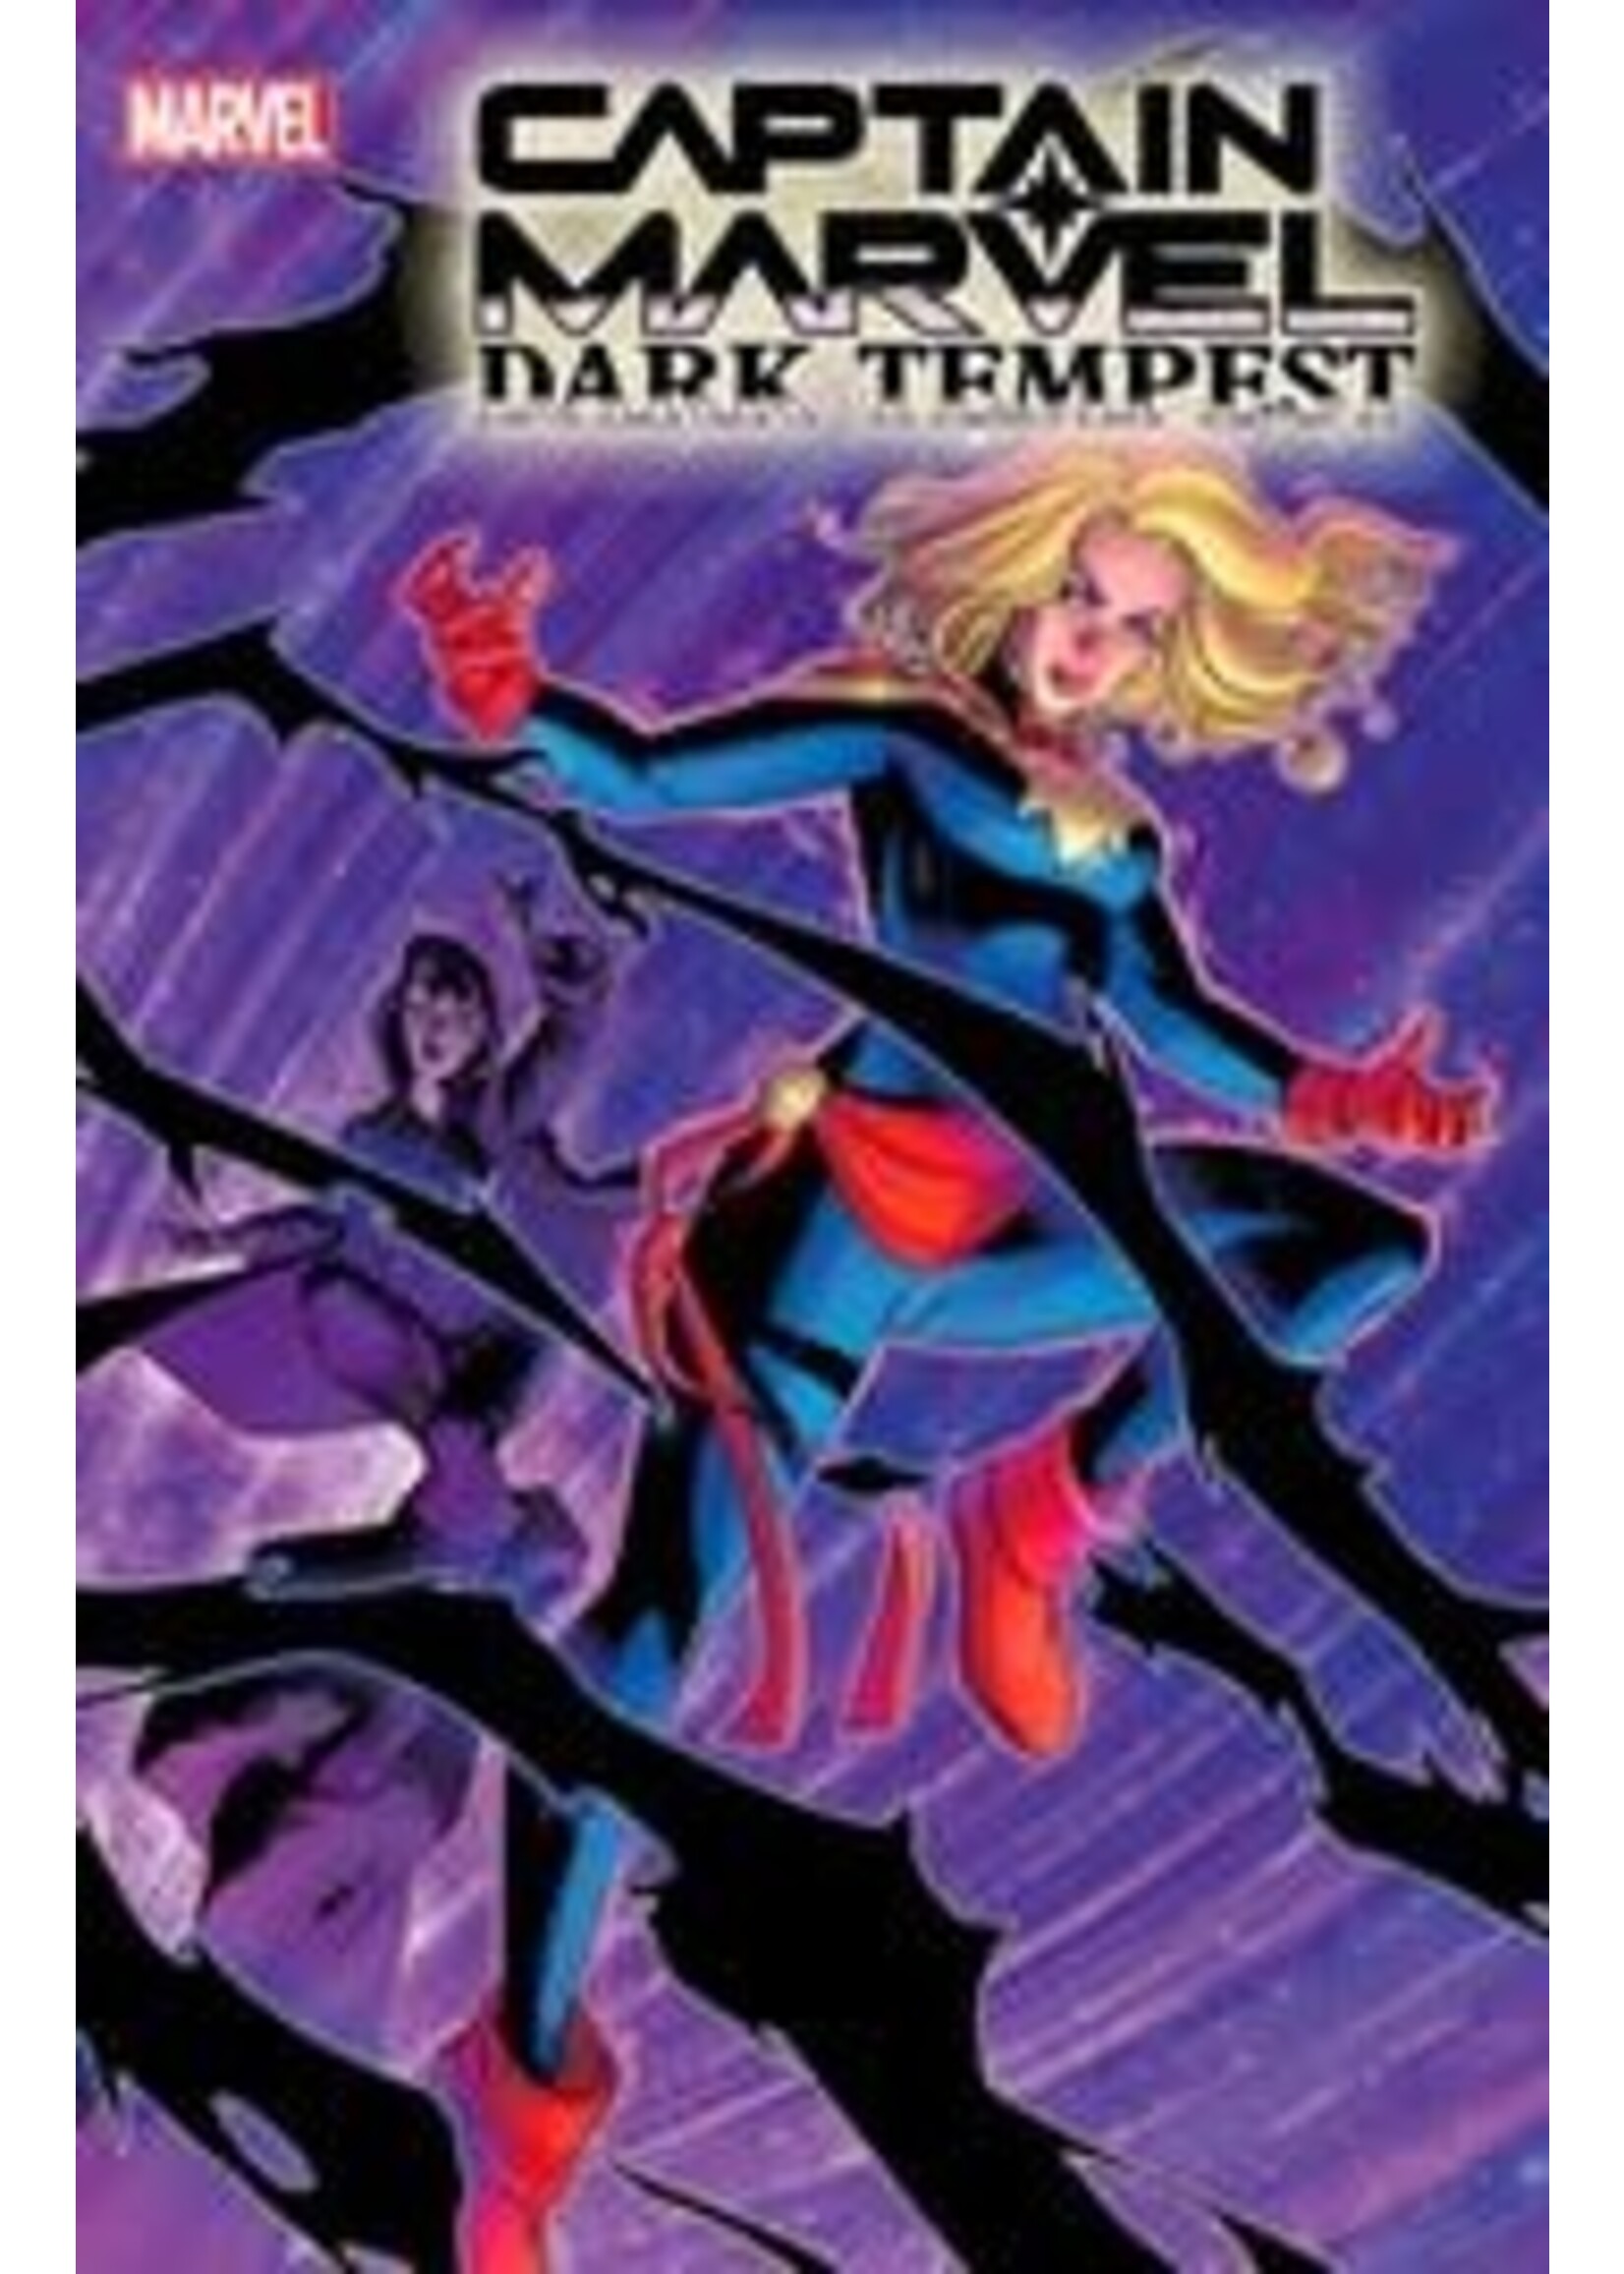 CAPTAIN MARVEL DARK TEMPEST complete 5 issue series